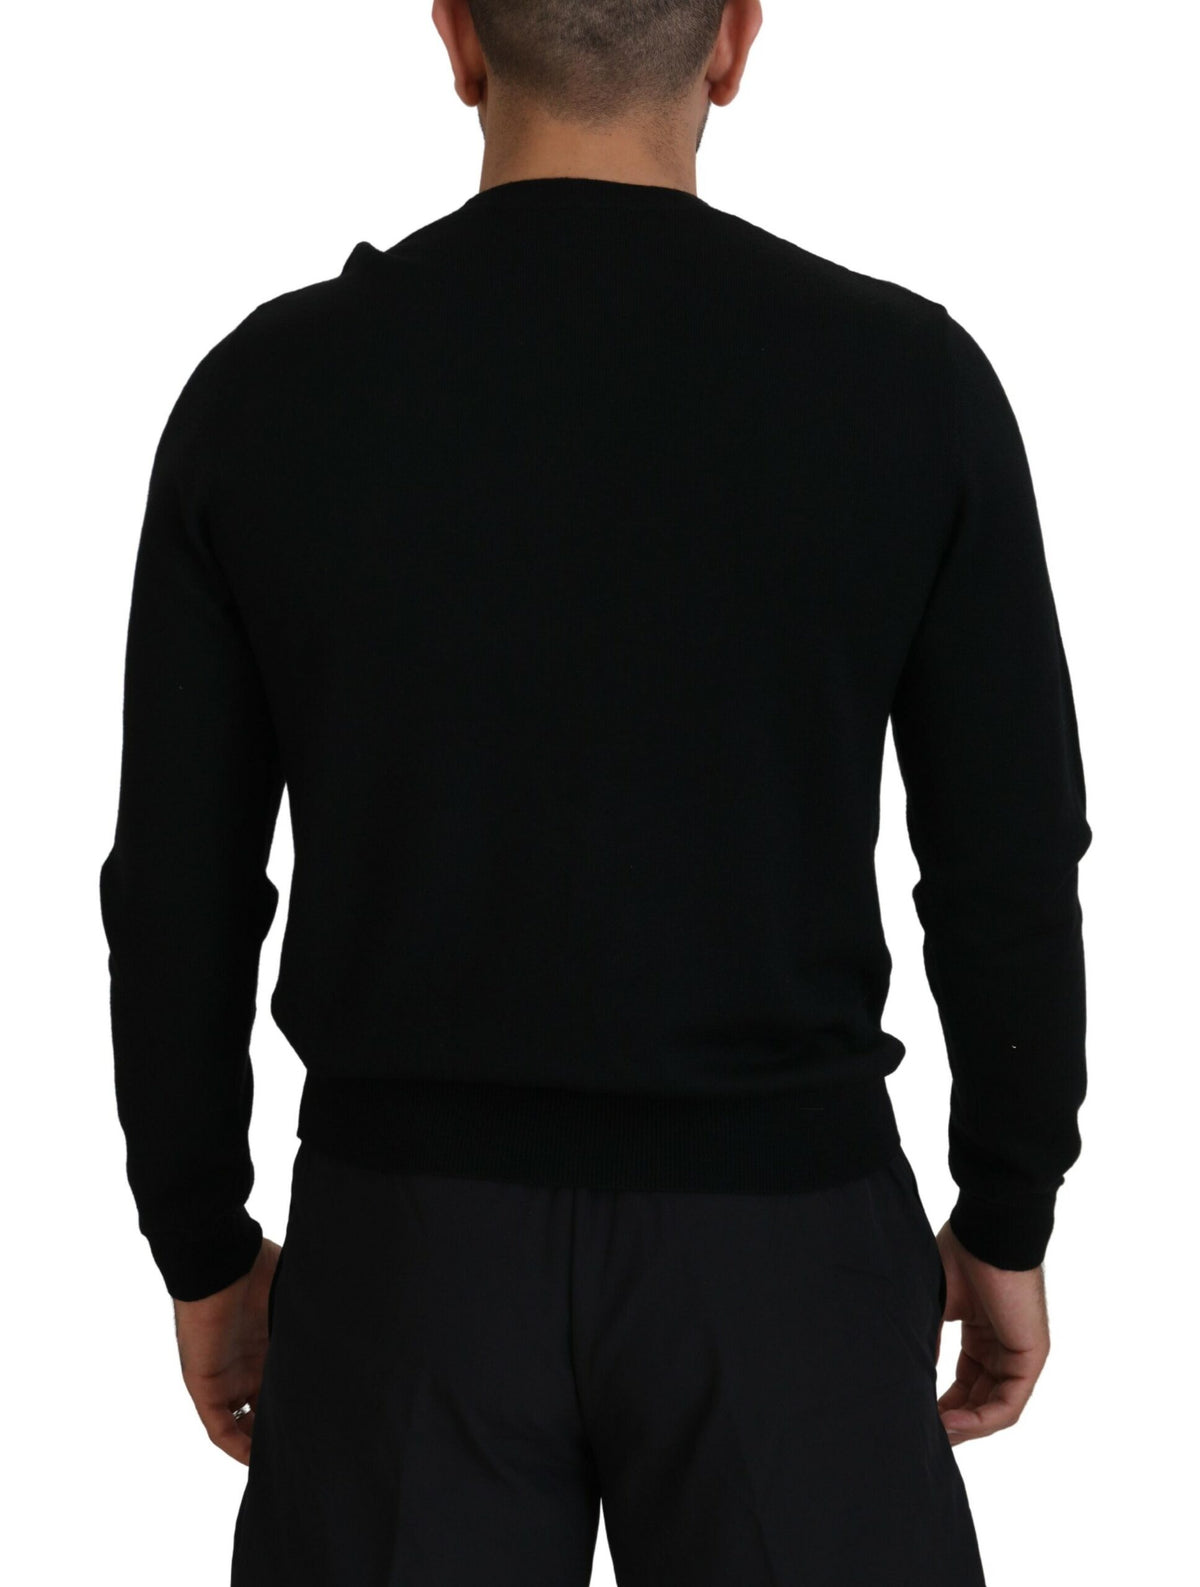 Dsquared² Black Logo Print Long Sleeves Men Pullover Sweater